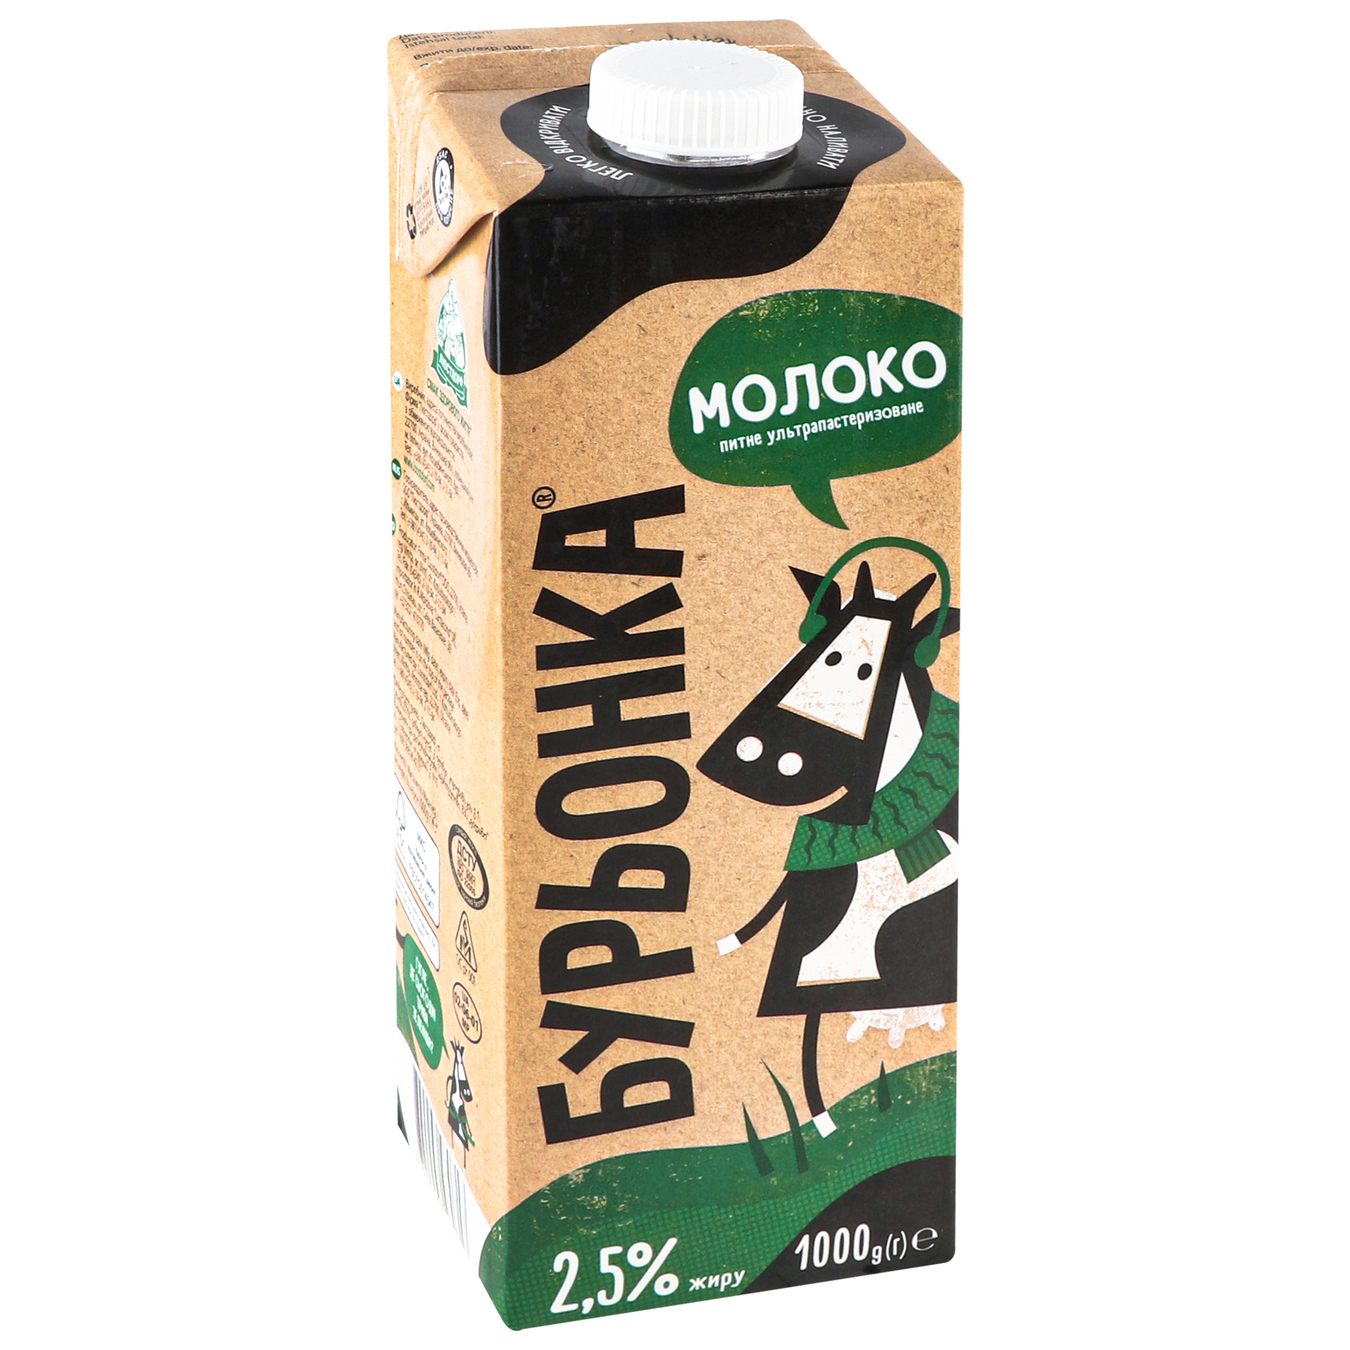 Burionka Ultrapasteurized Milk 2,5% 1l 2